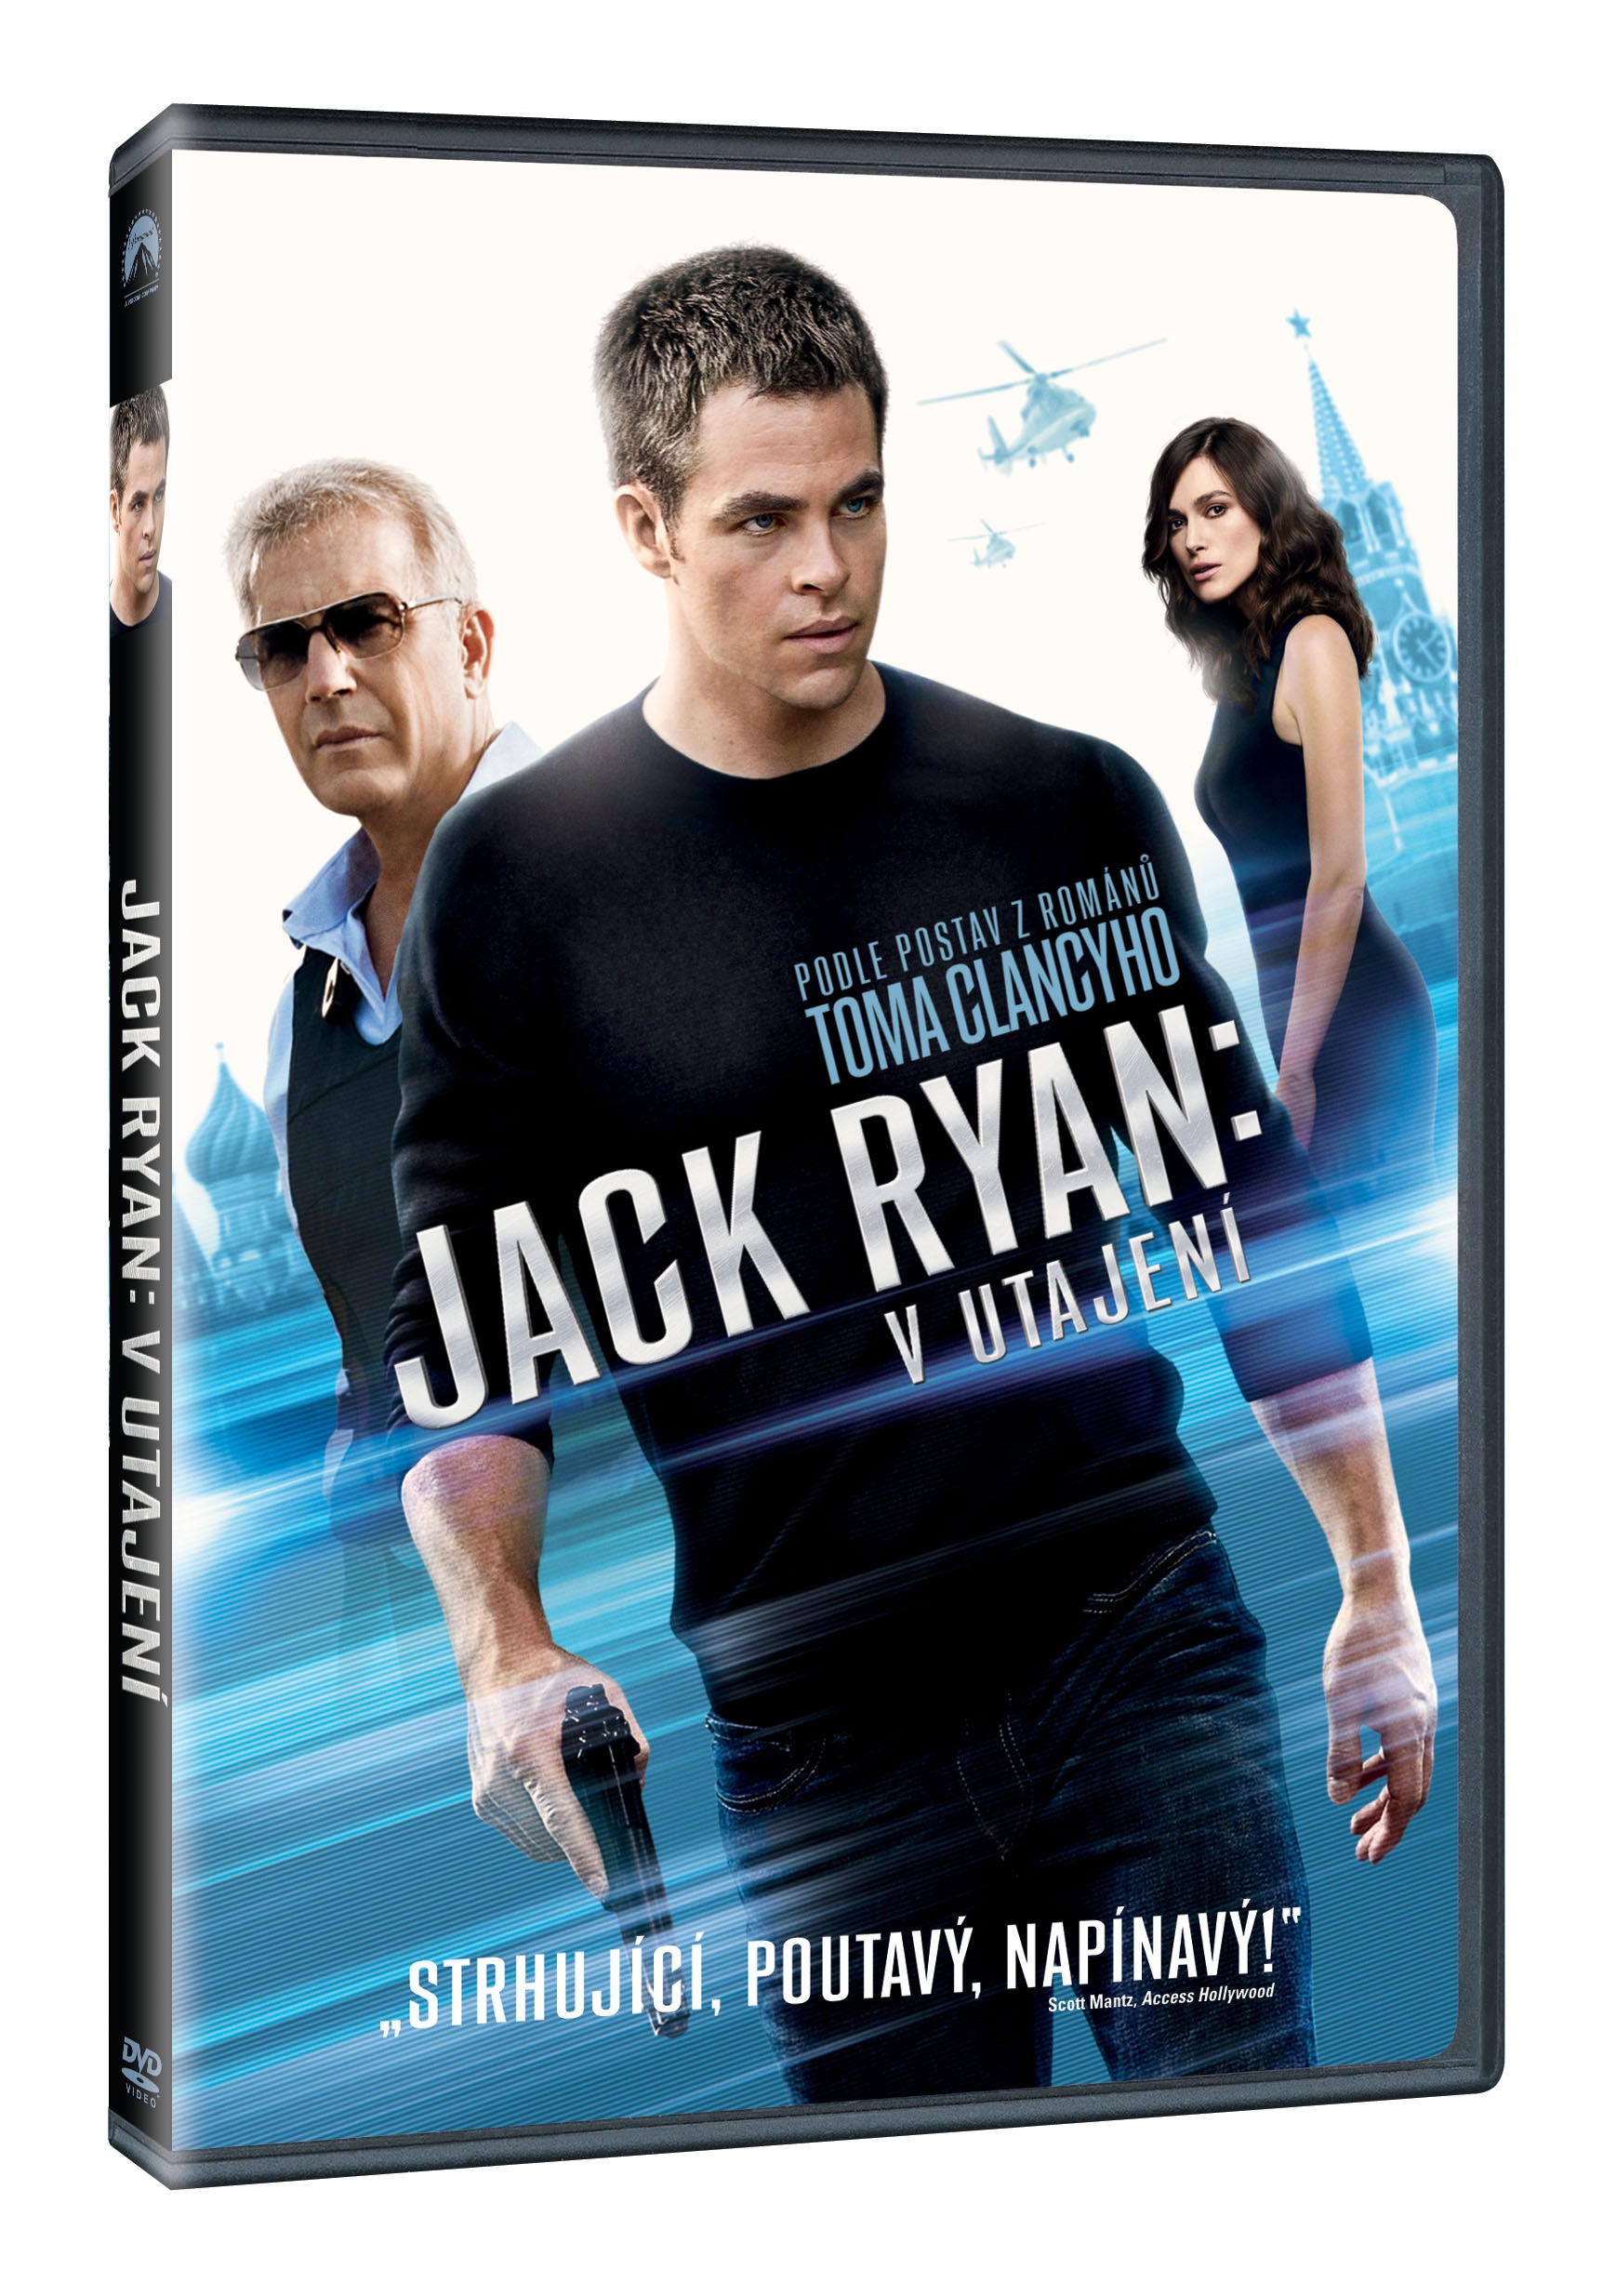 Jack Ryan: V utajeni DVD / Jack Ryan: Shadow Recruit